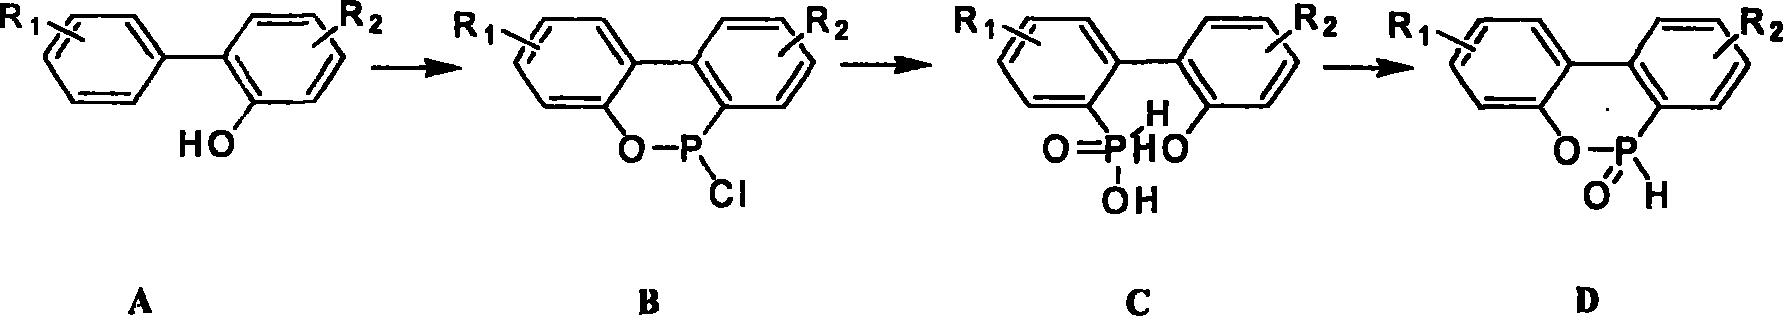 Prepn process of cyclic phosphonate compound